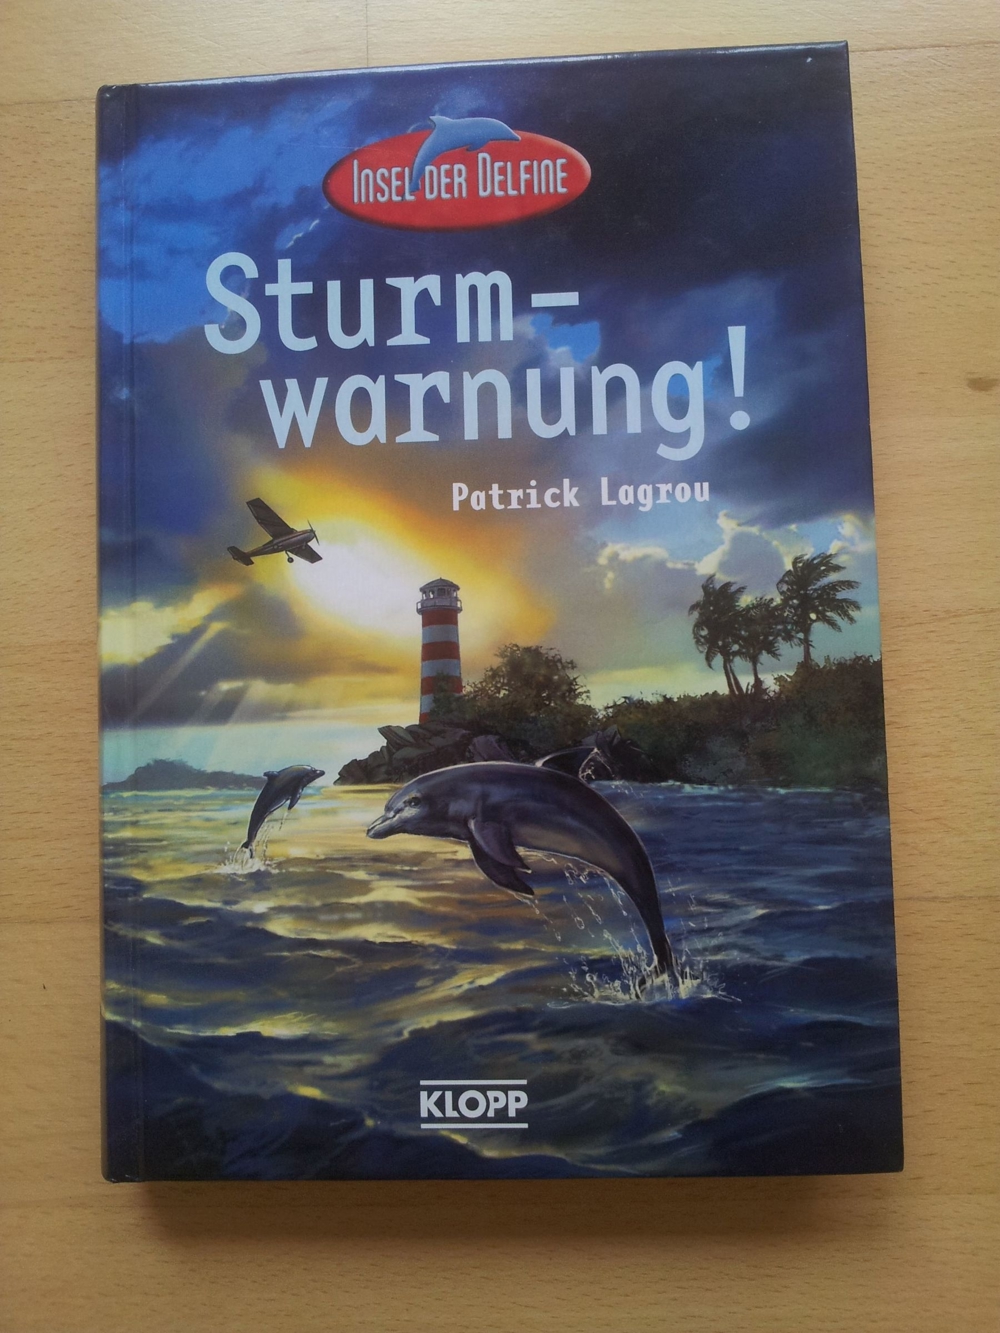 Jugendbuch: Insel der Delfine, Patrick Lagrou